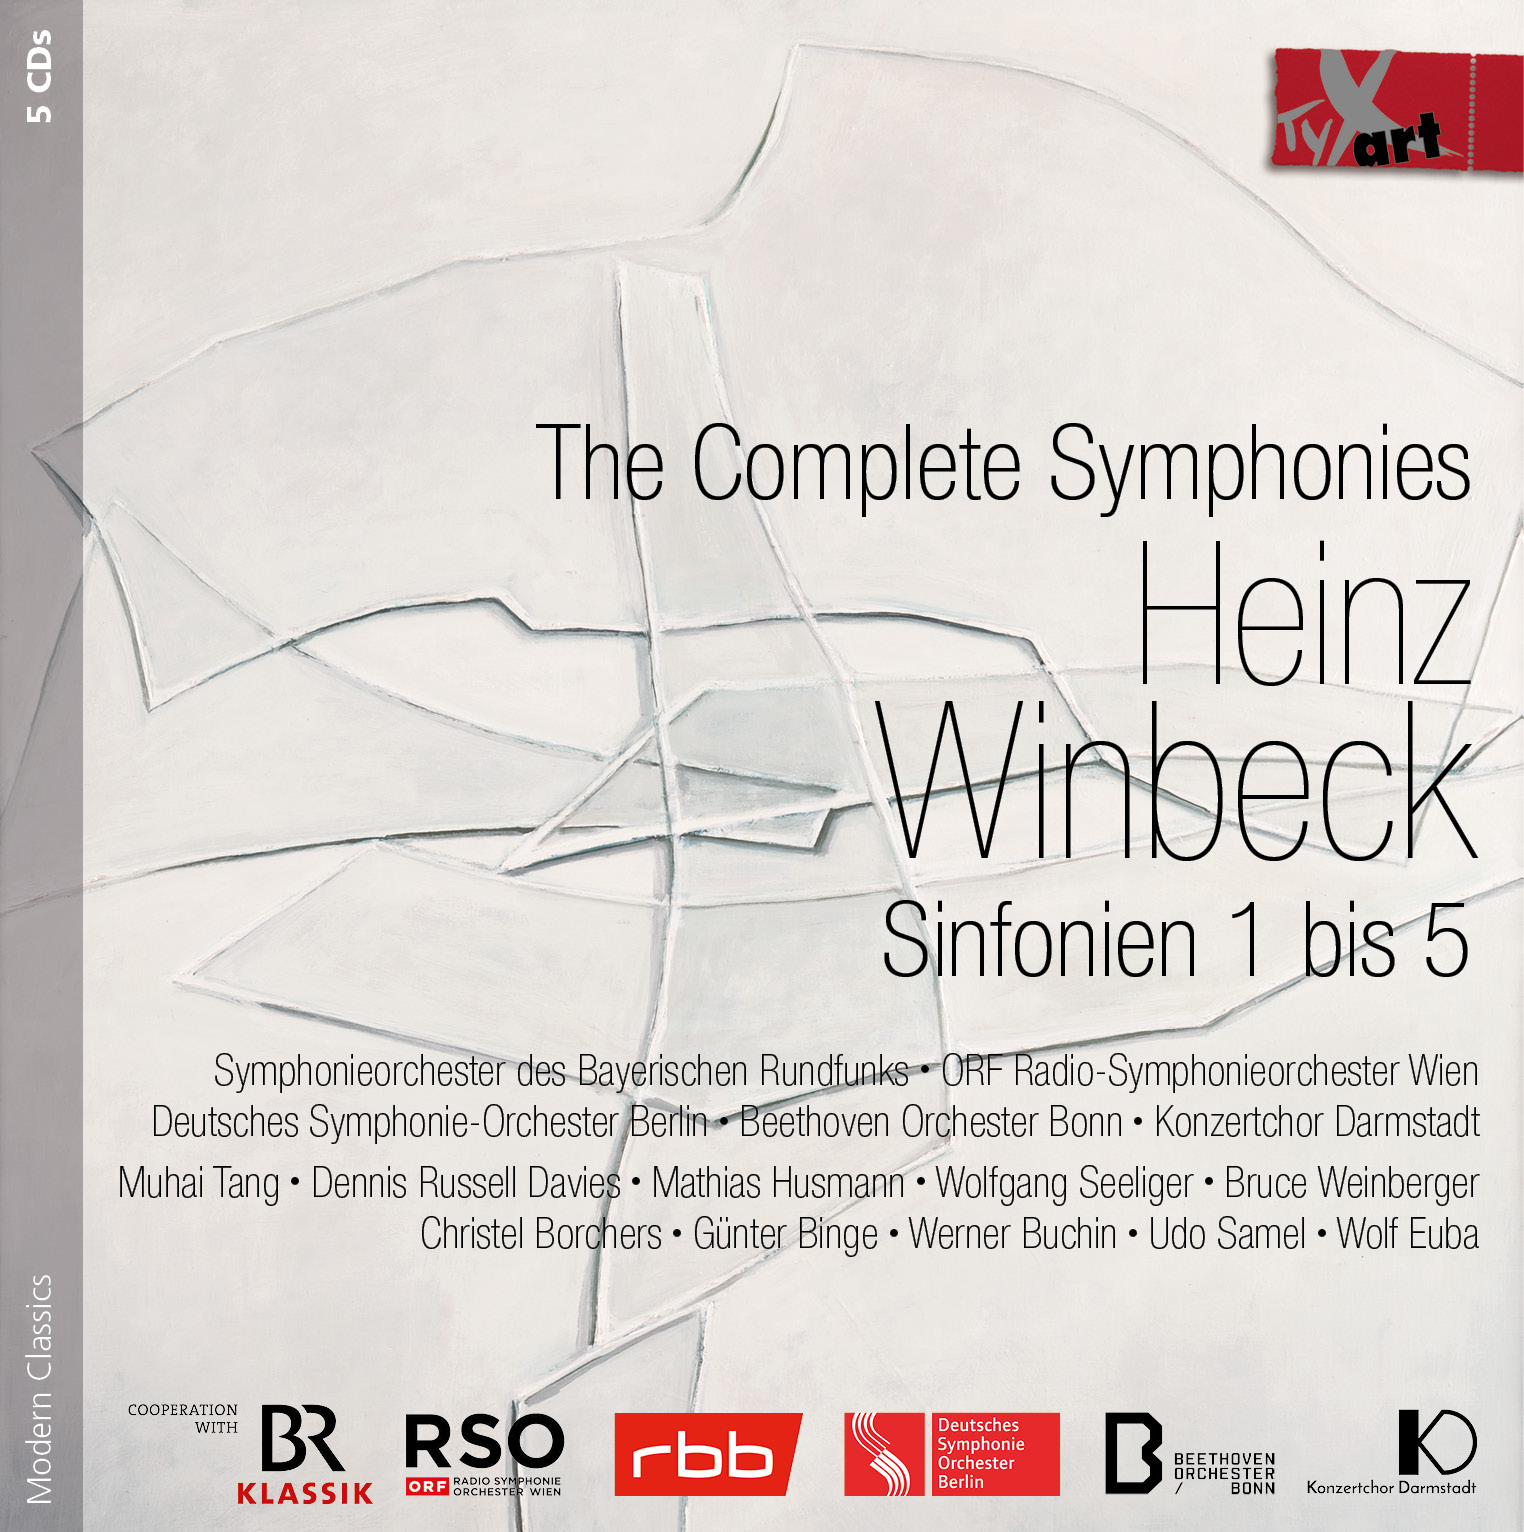 Heinz Winbeck - The Complete Symphonies (1-5)